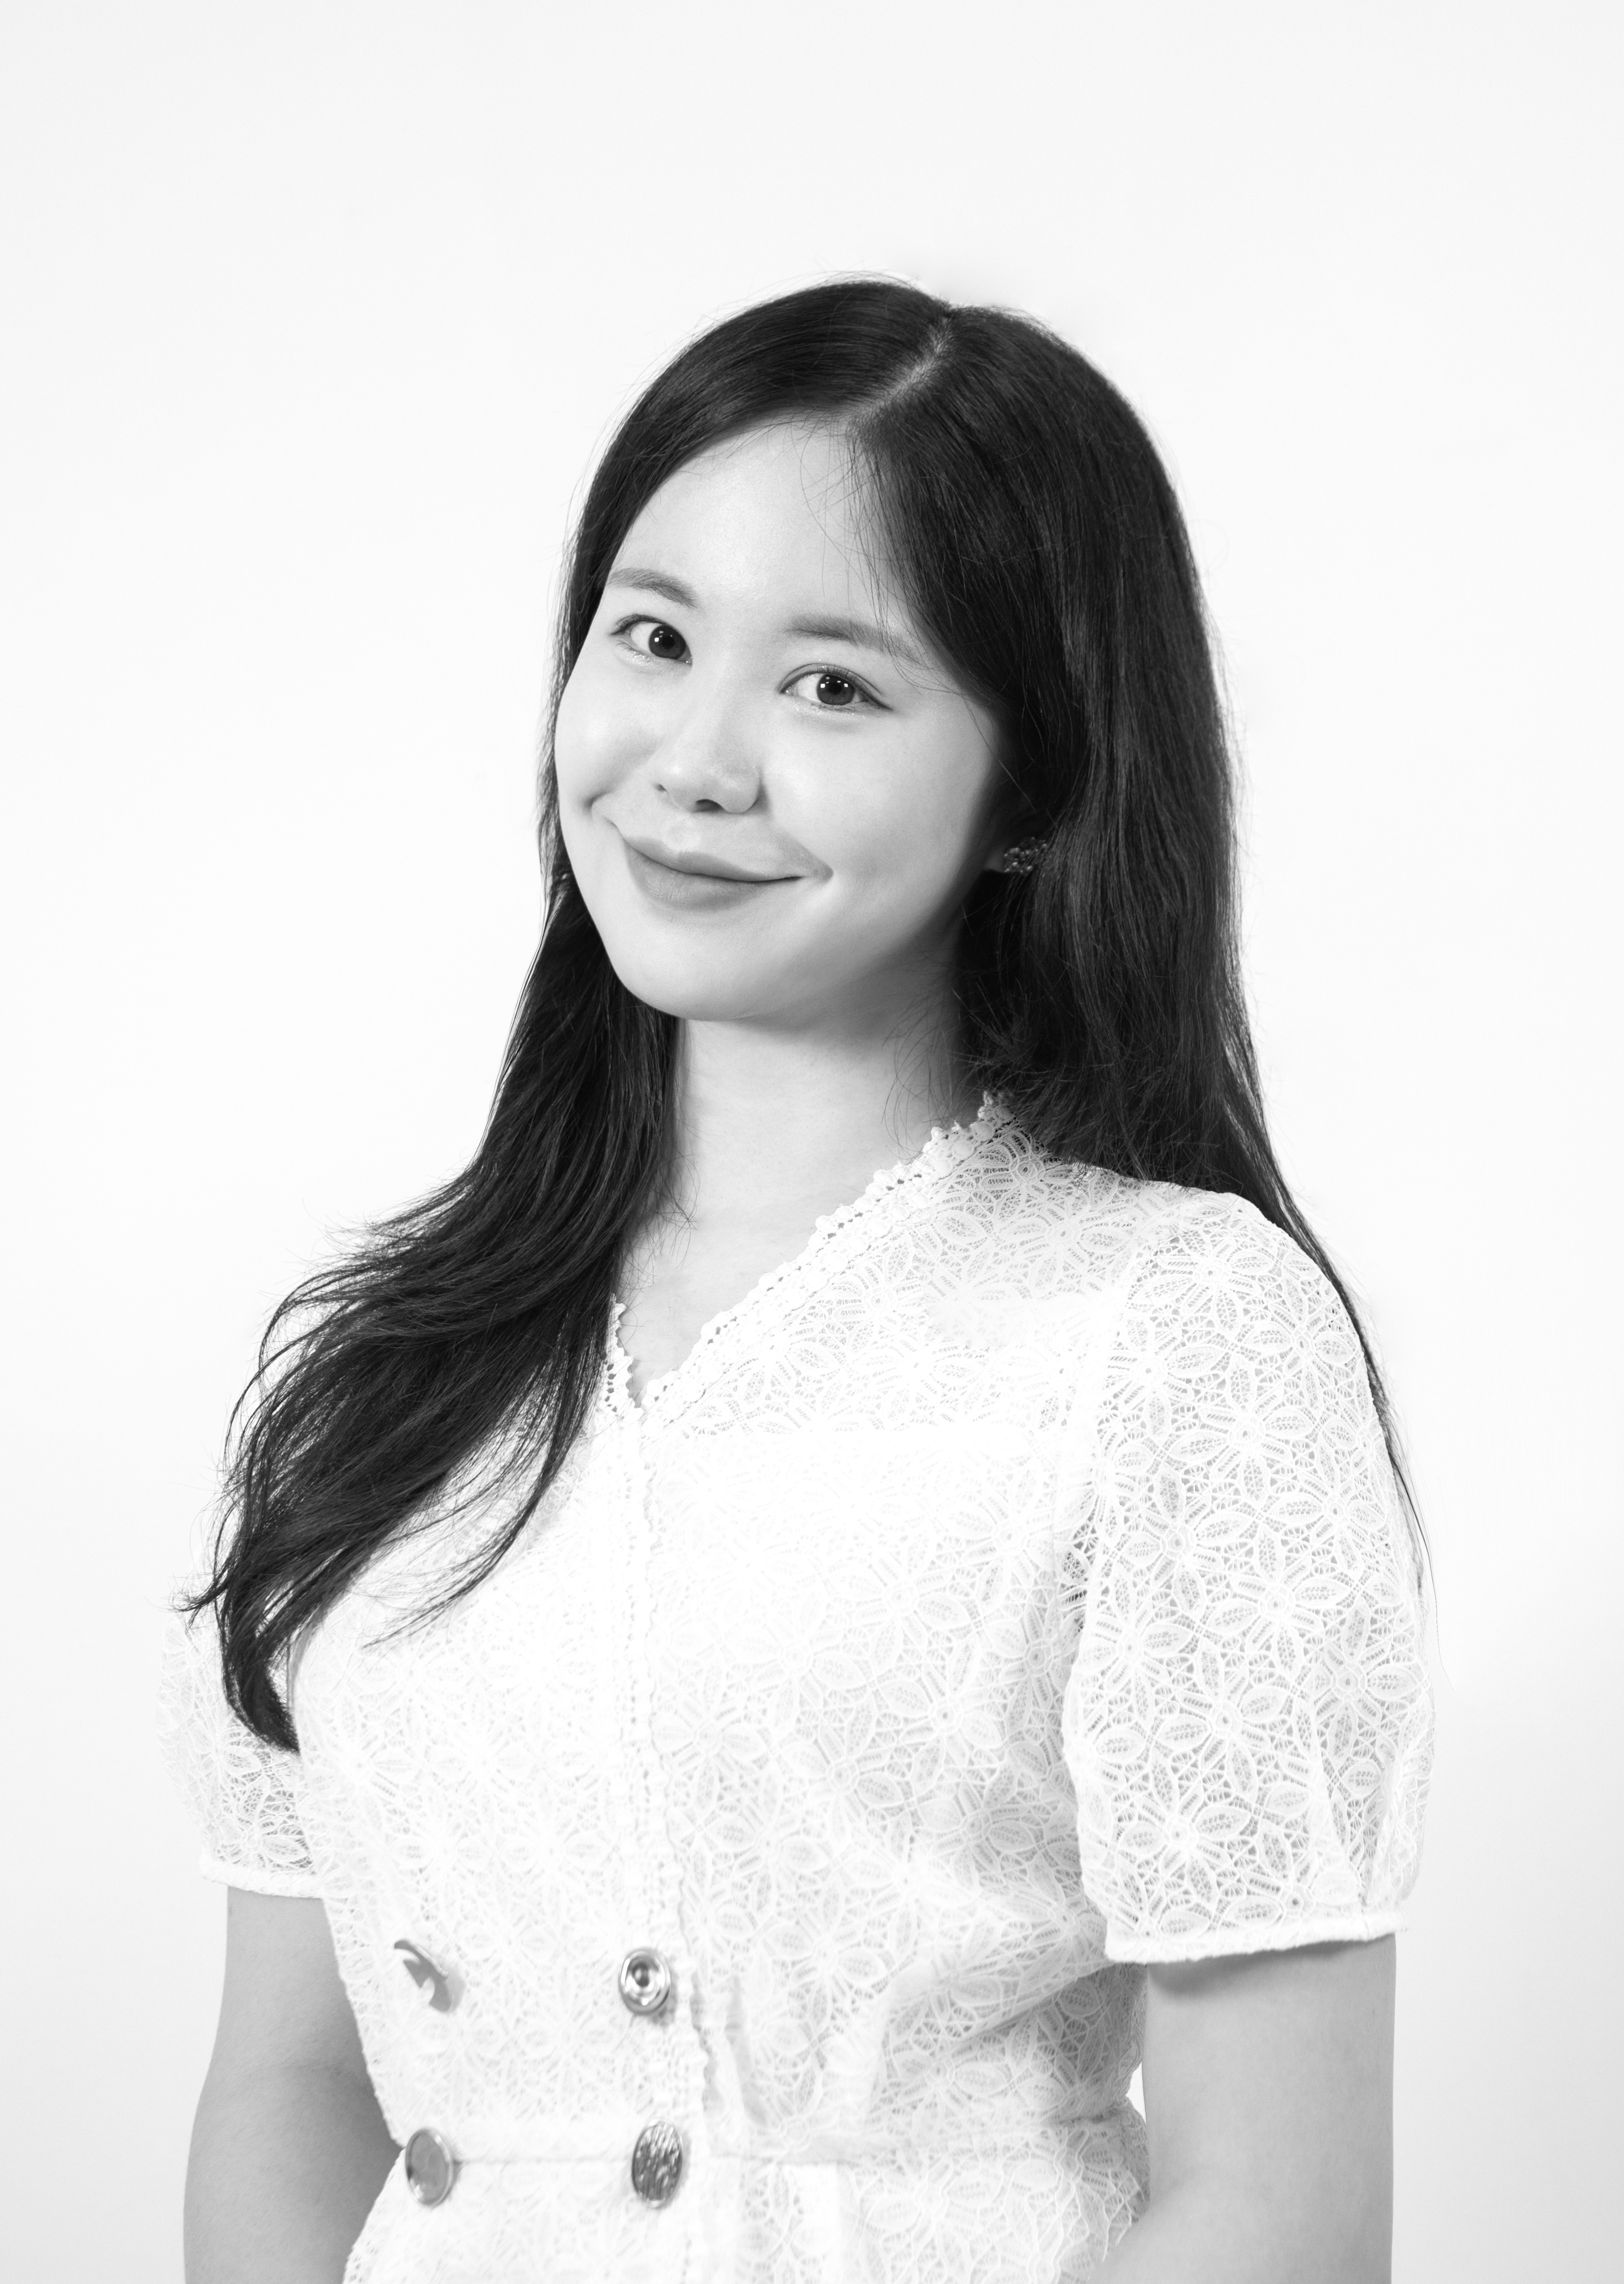 Chaehyeon Kim